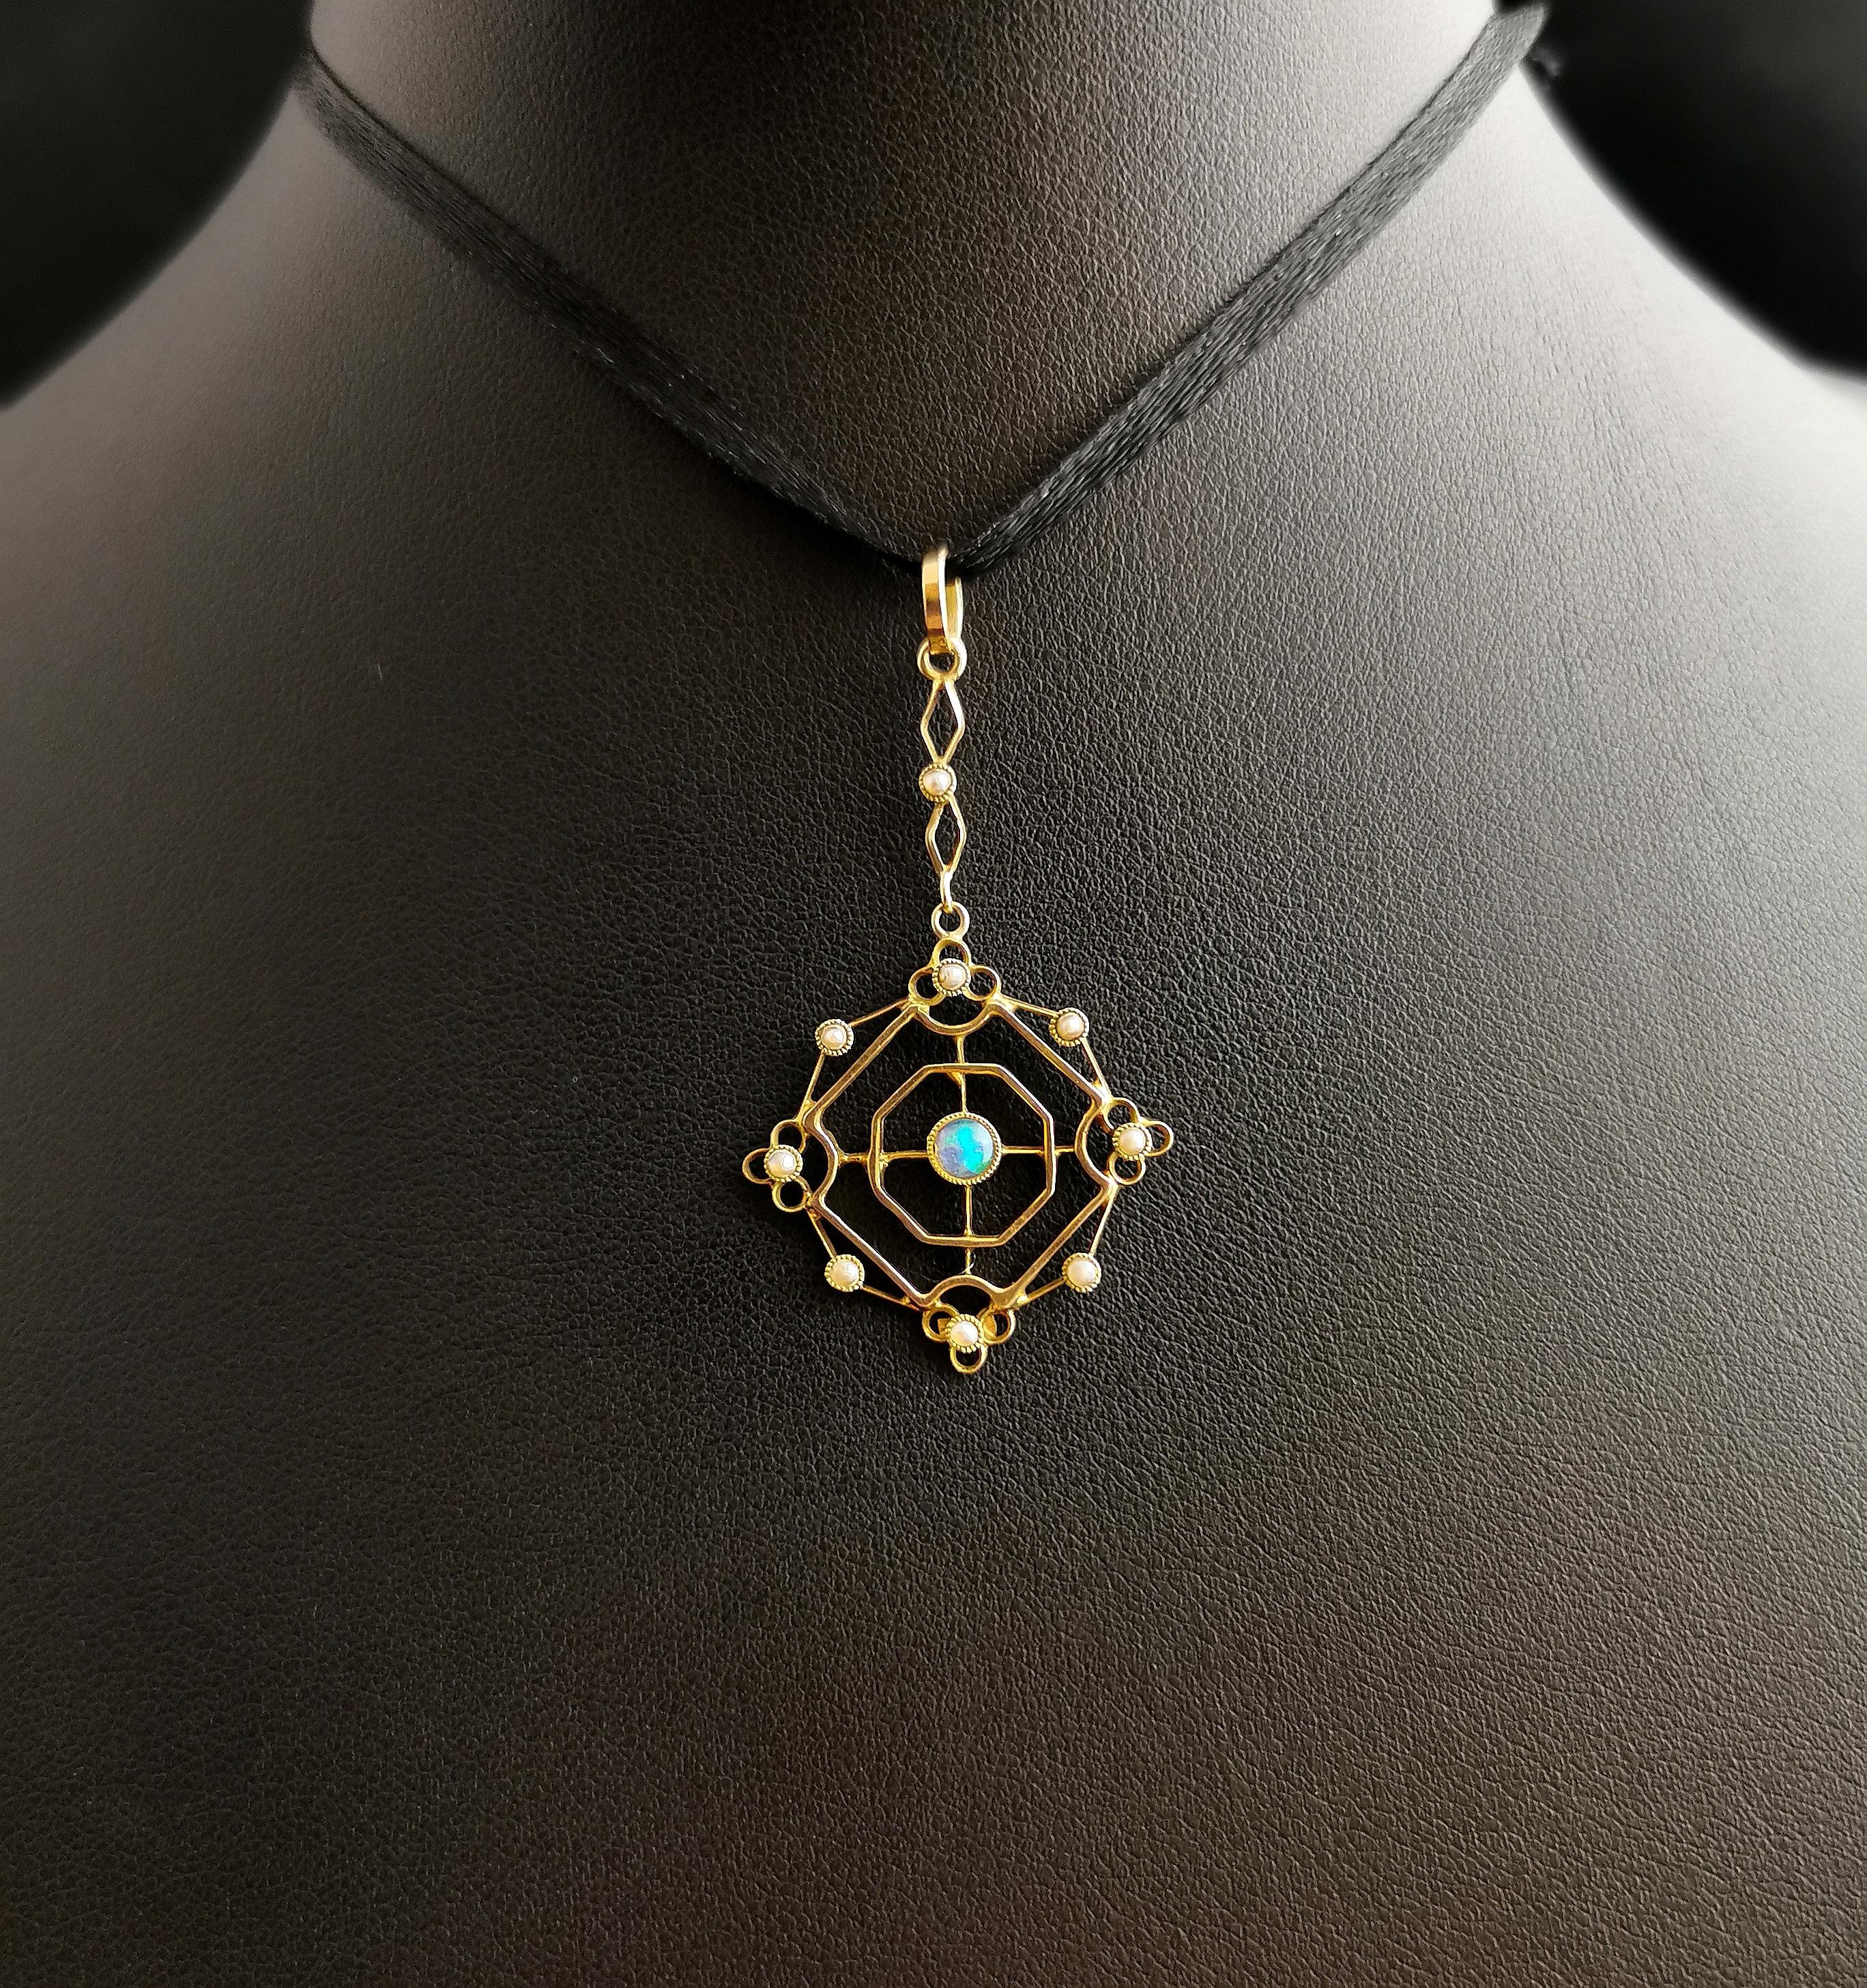 Antique Opal and Seed Pearl Pendant, 15k Gold, Art Nouveau 1